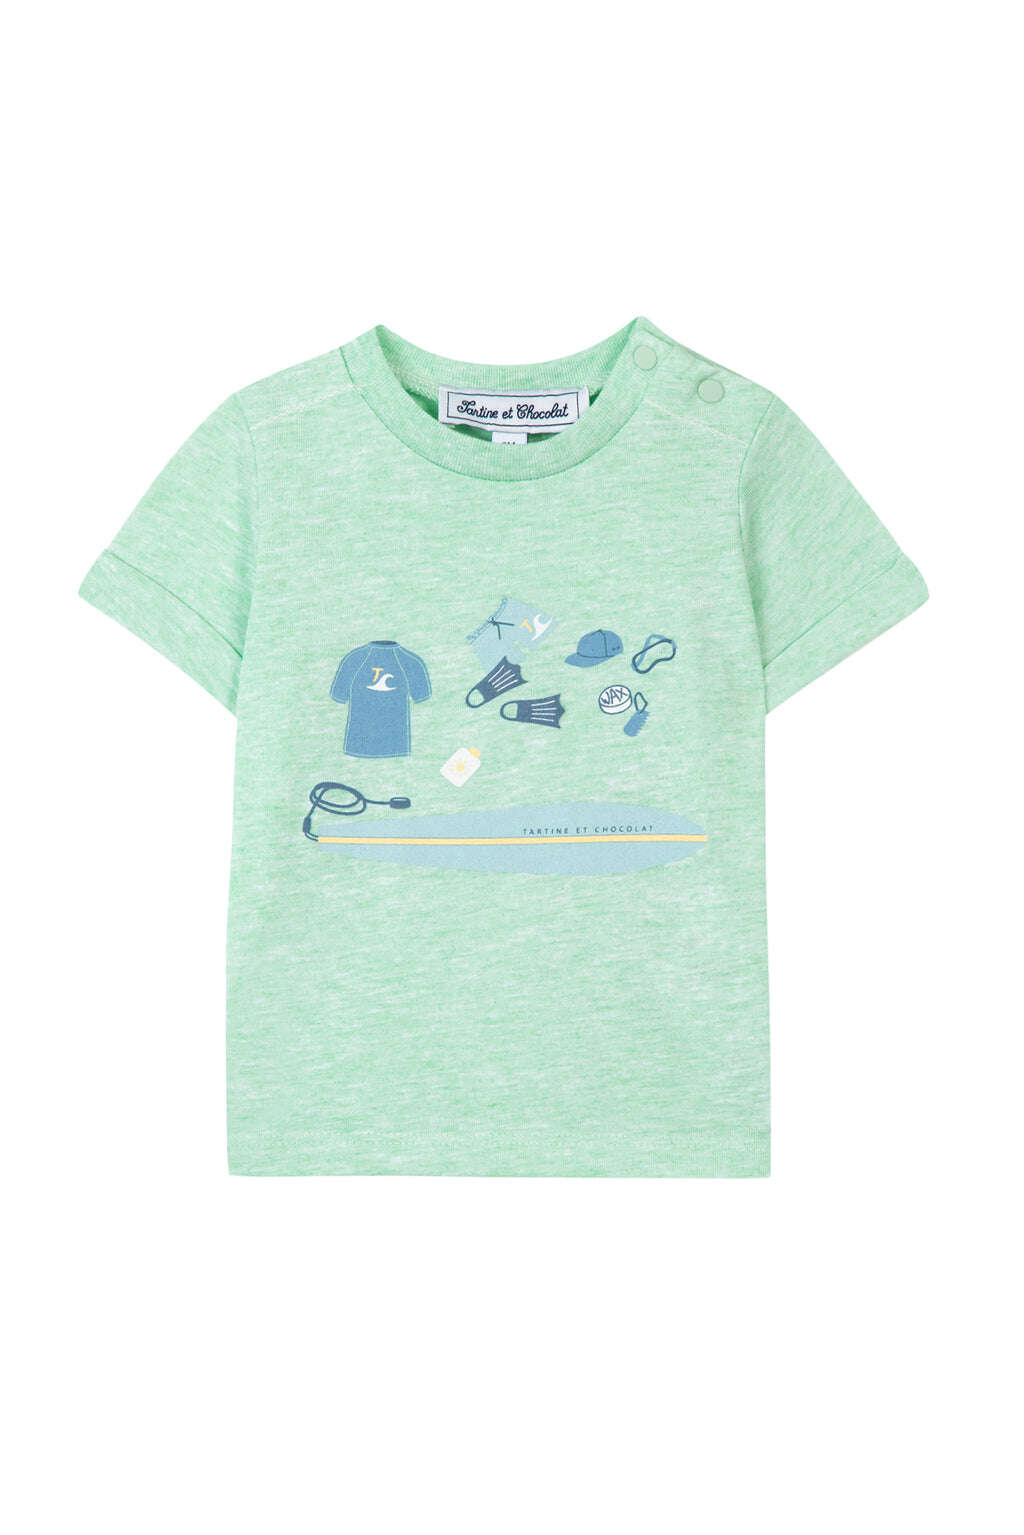 T-shirt -  Vert illustration surfeur